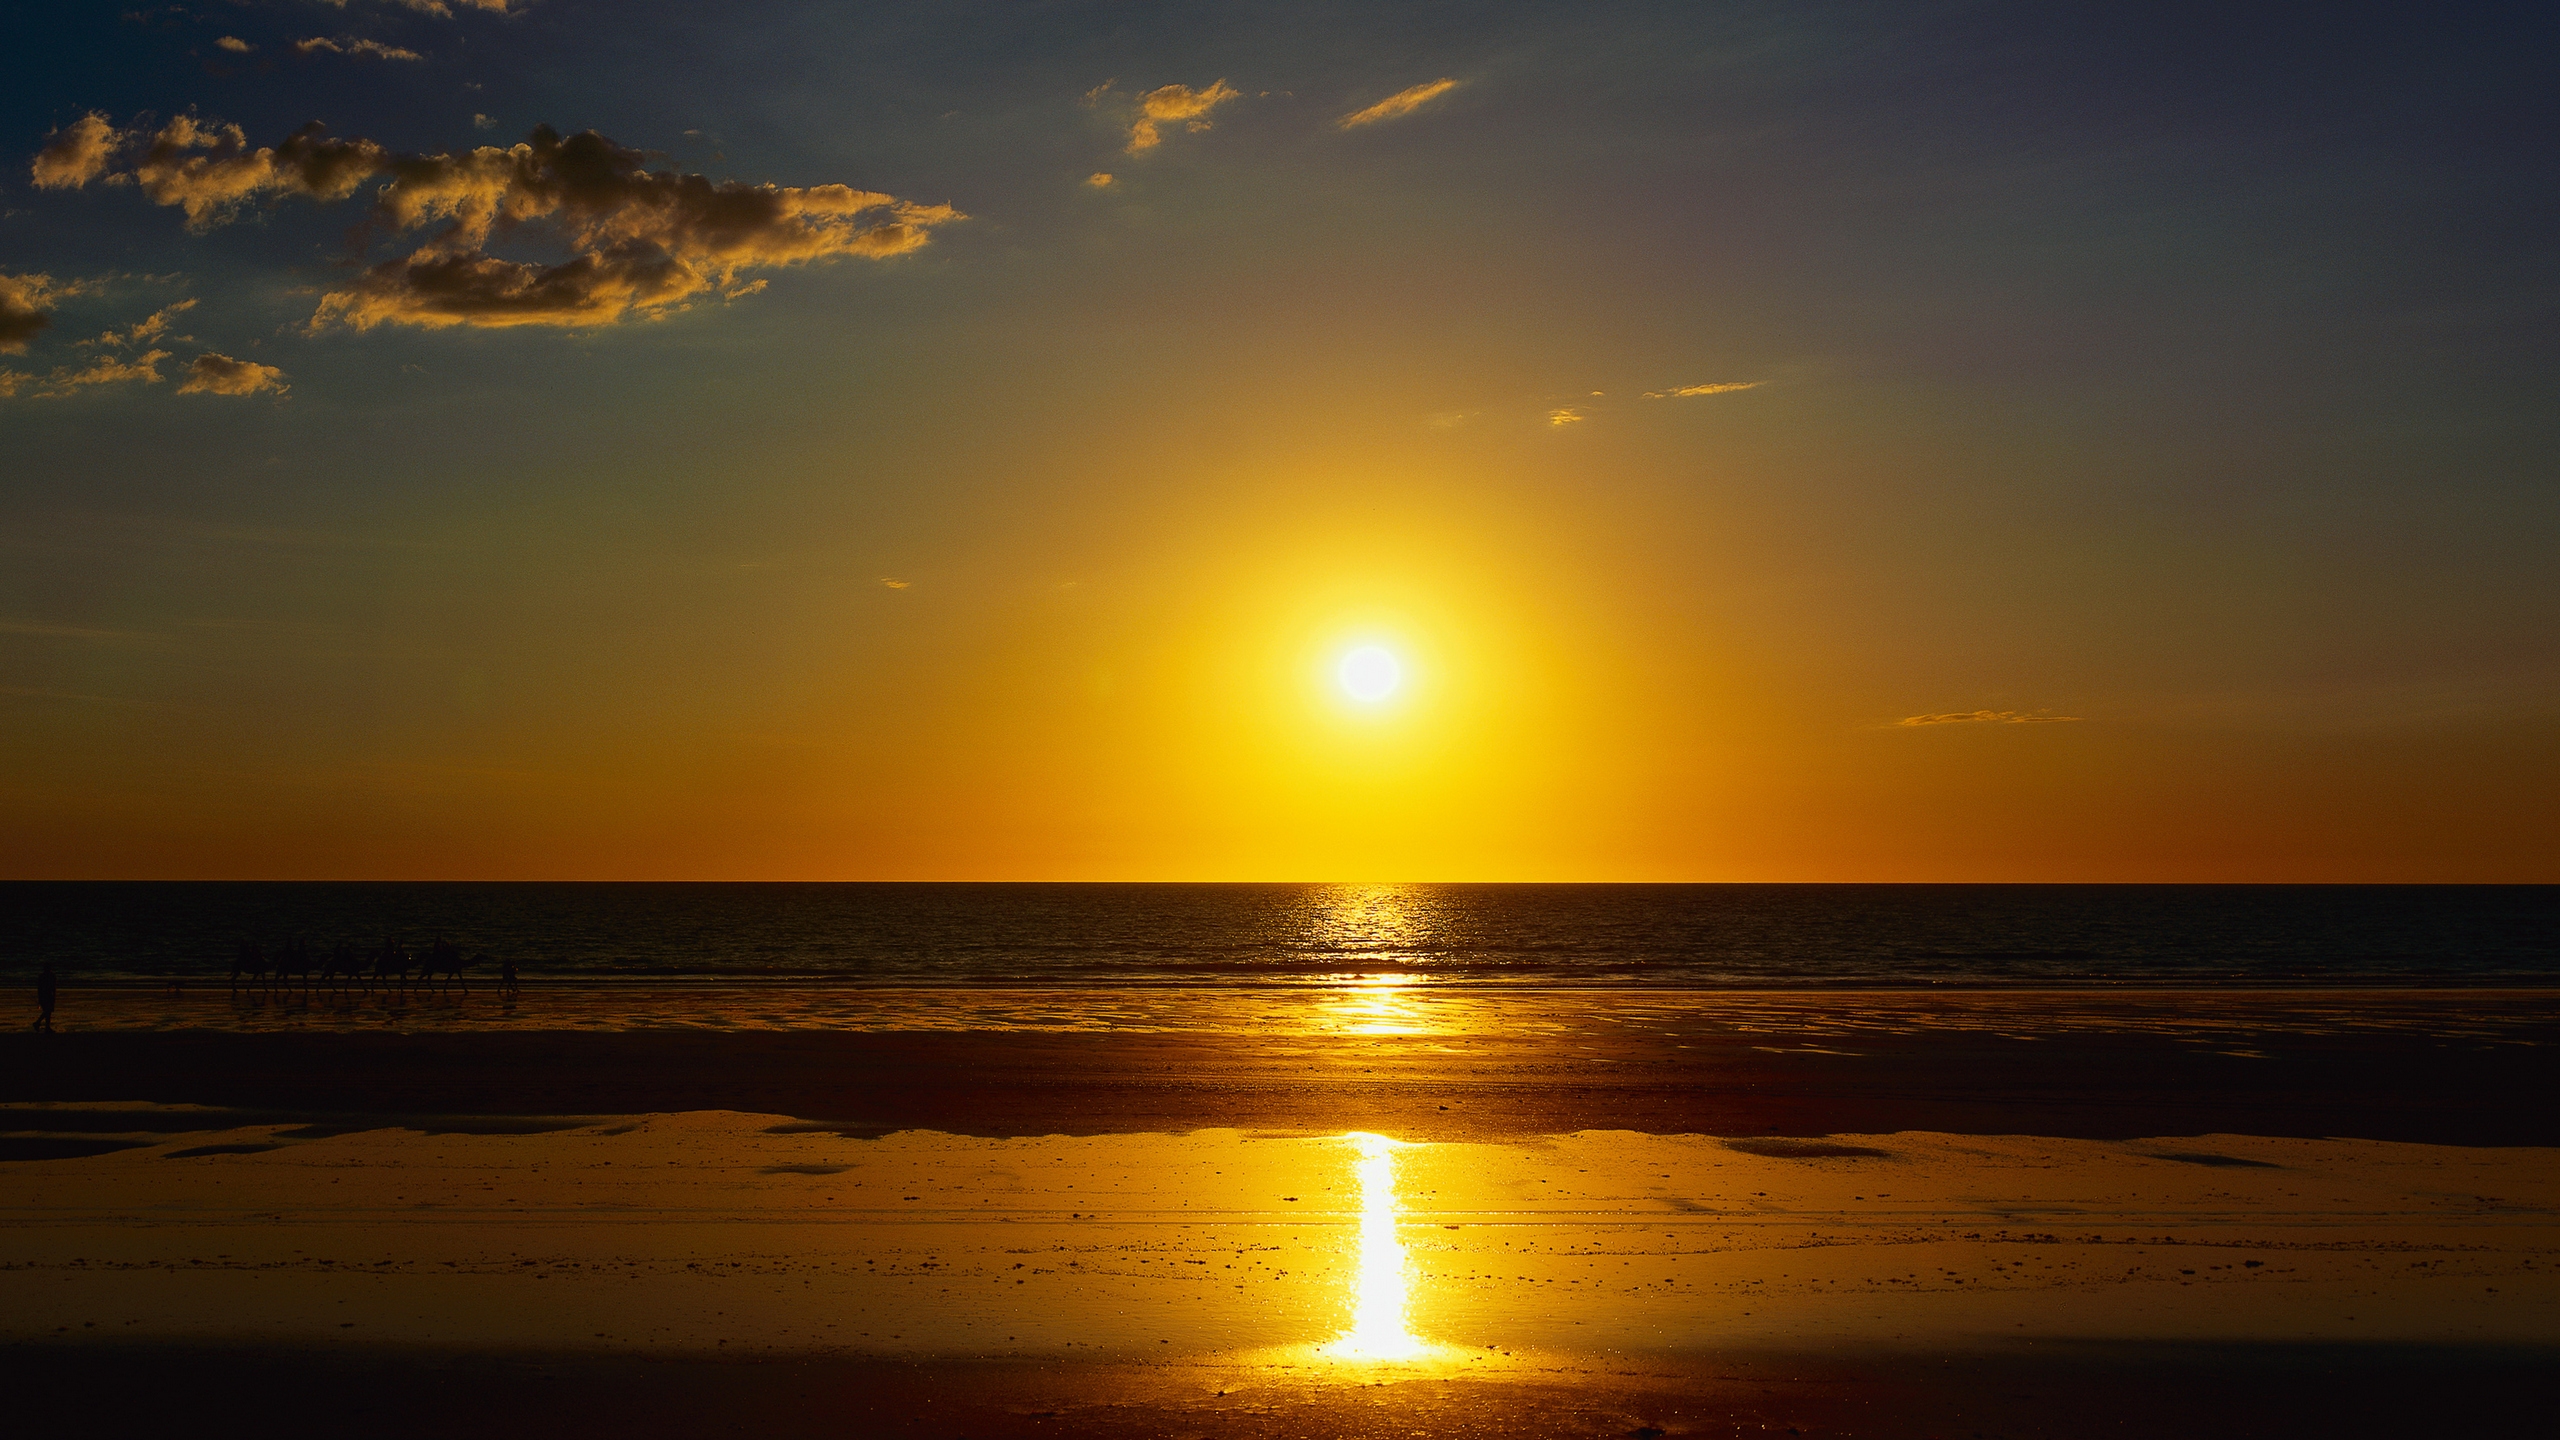 Sea Sunset for 2560x1440 HDTV resolution